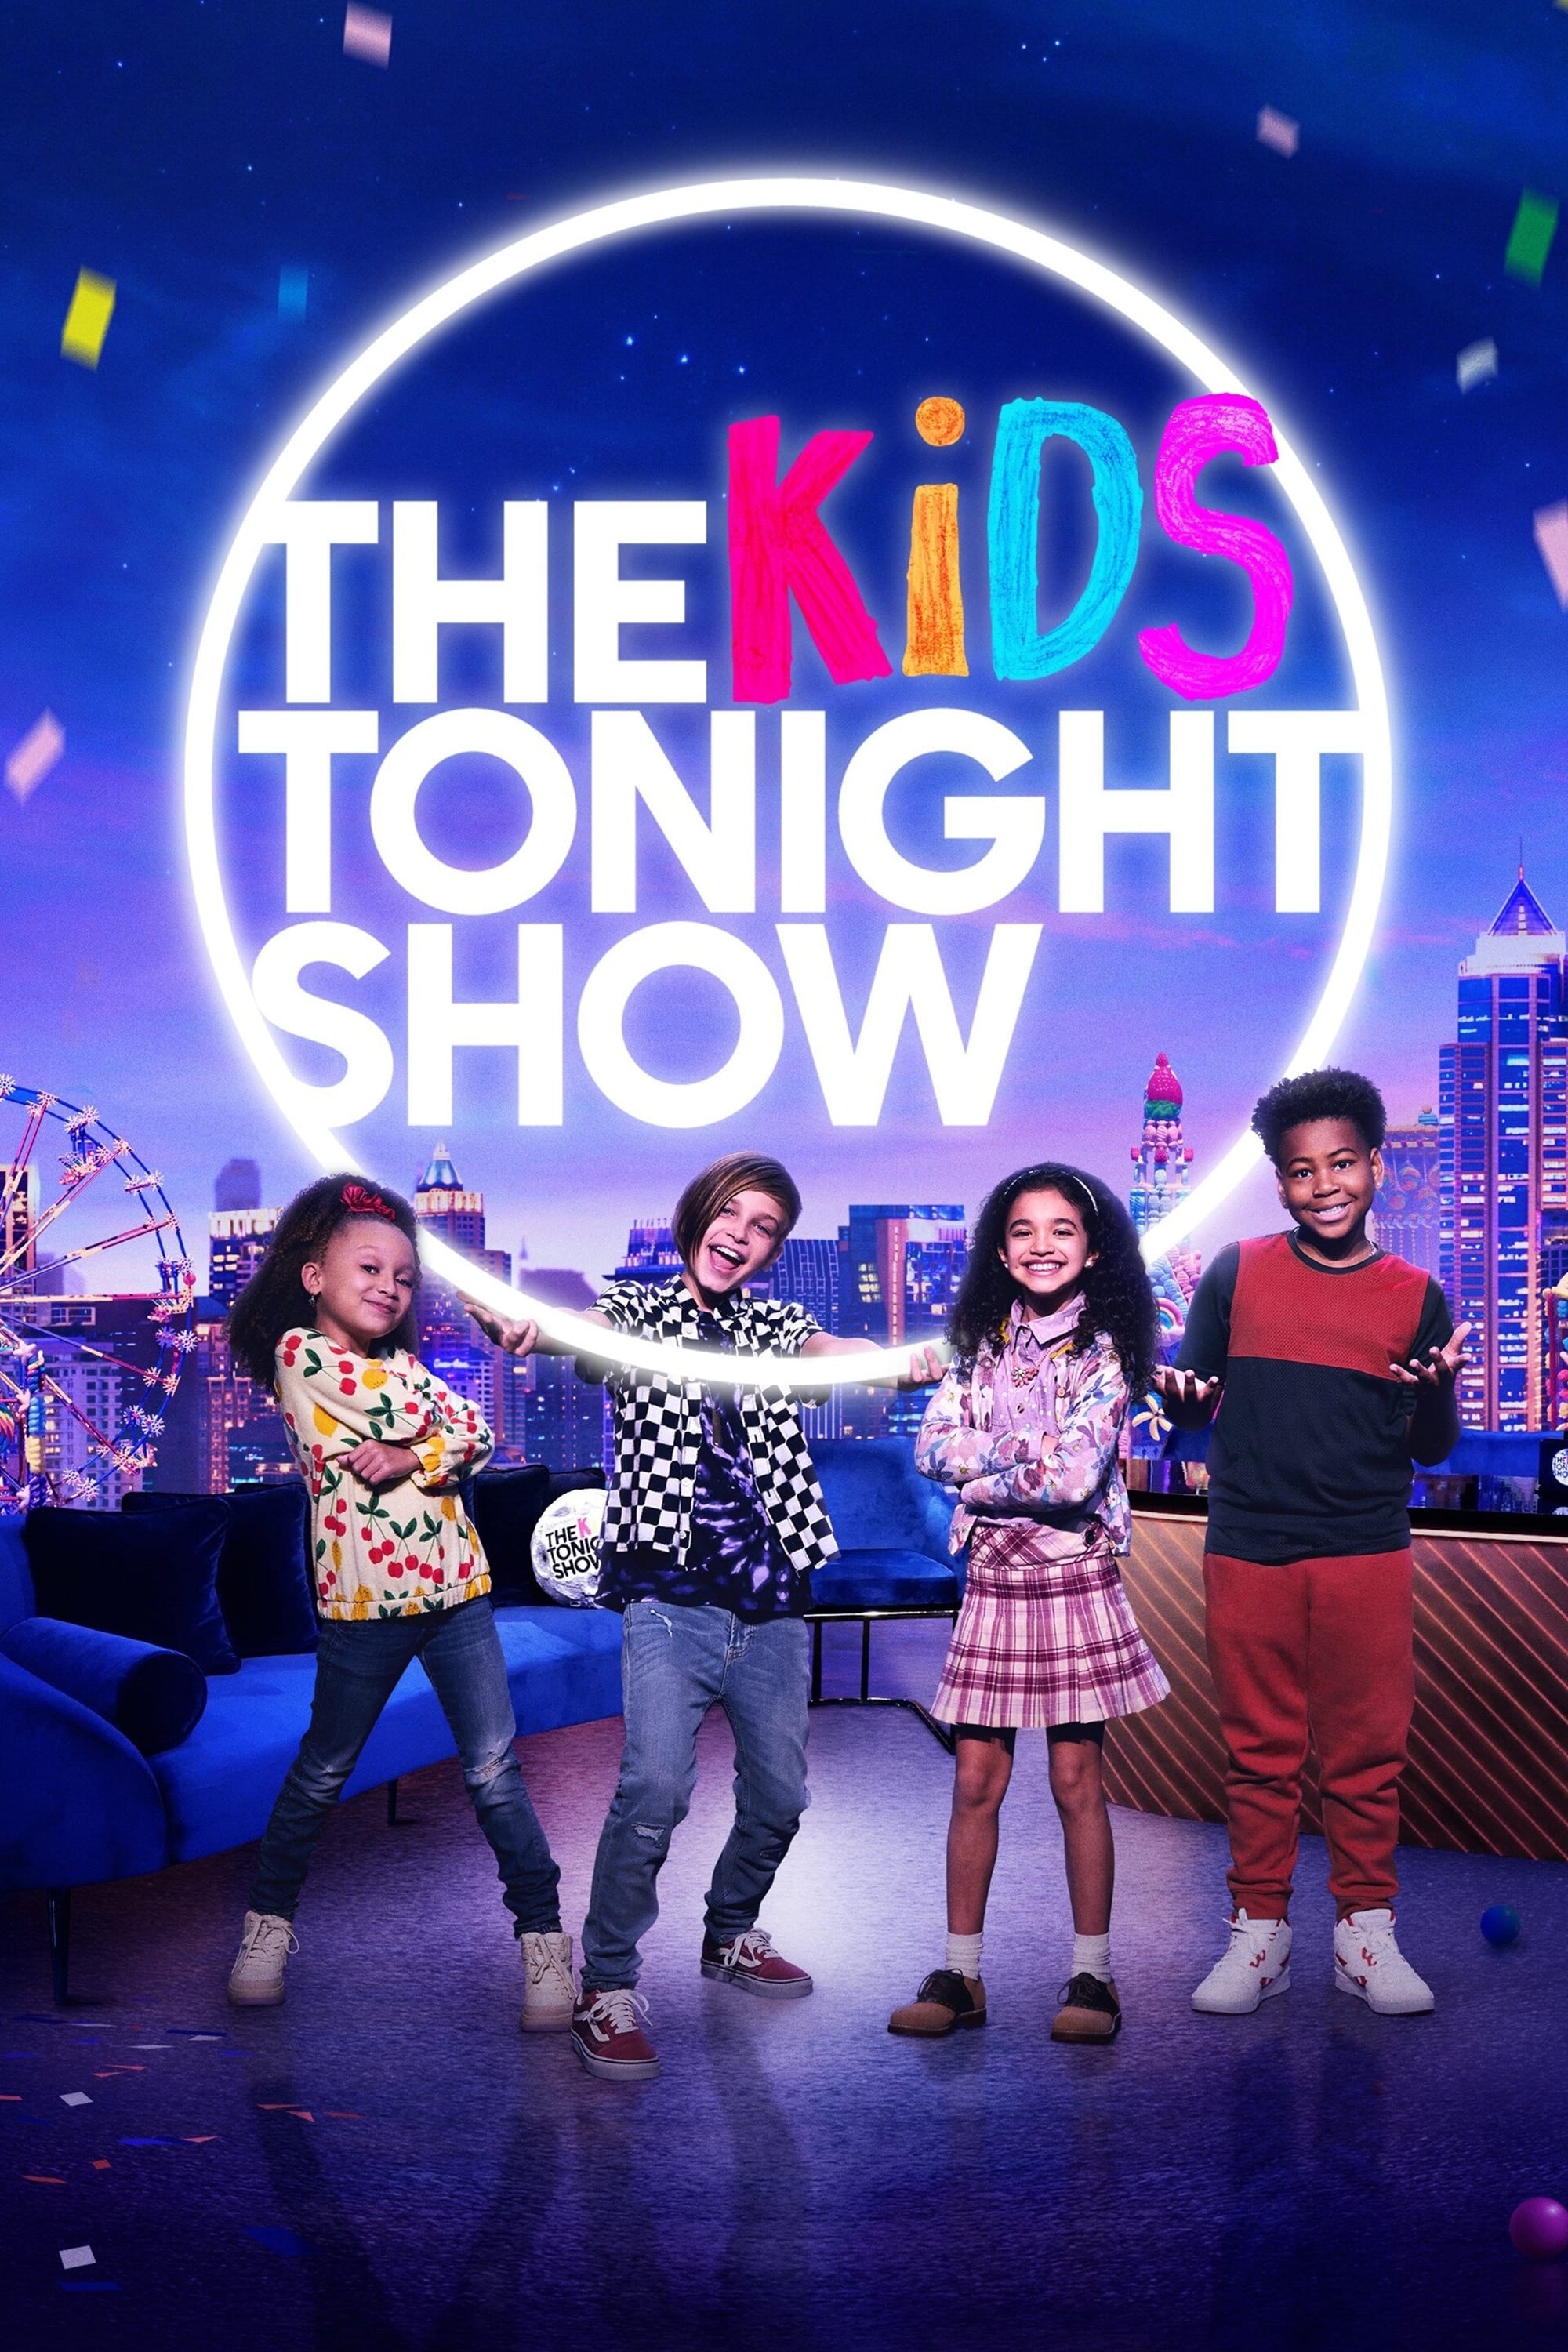 The Kids Tonight Show (2021)